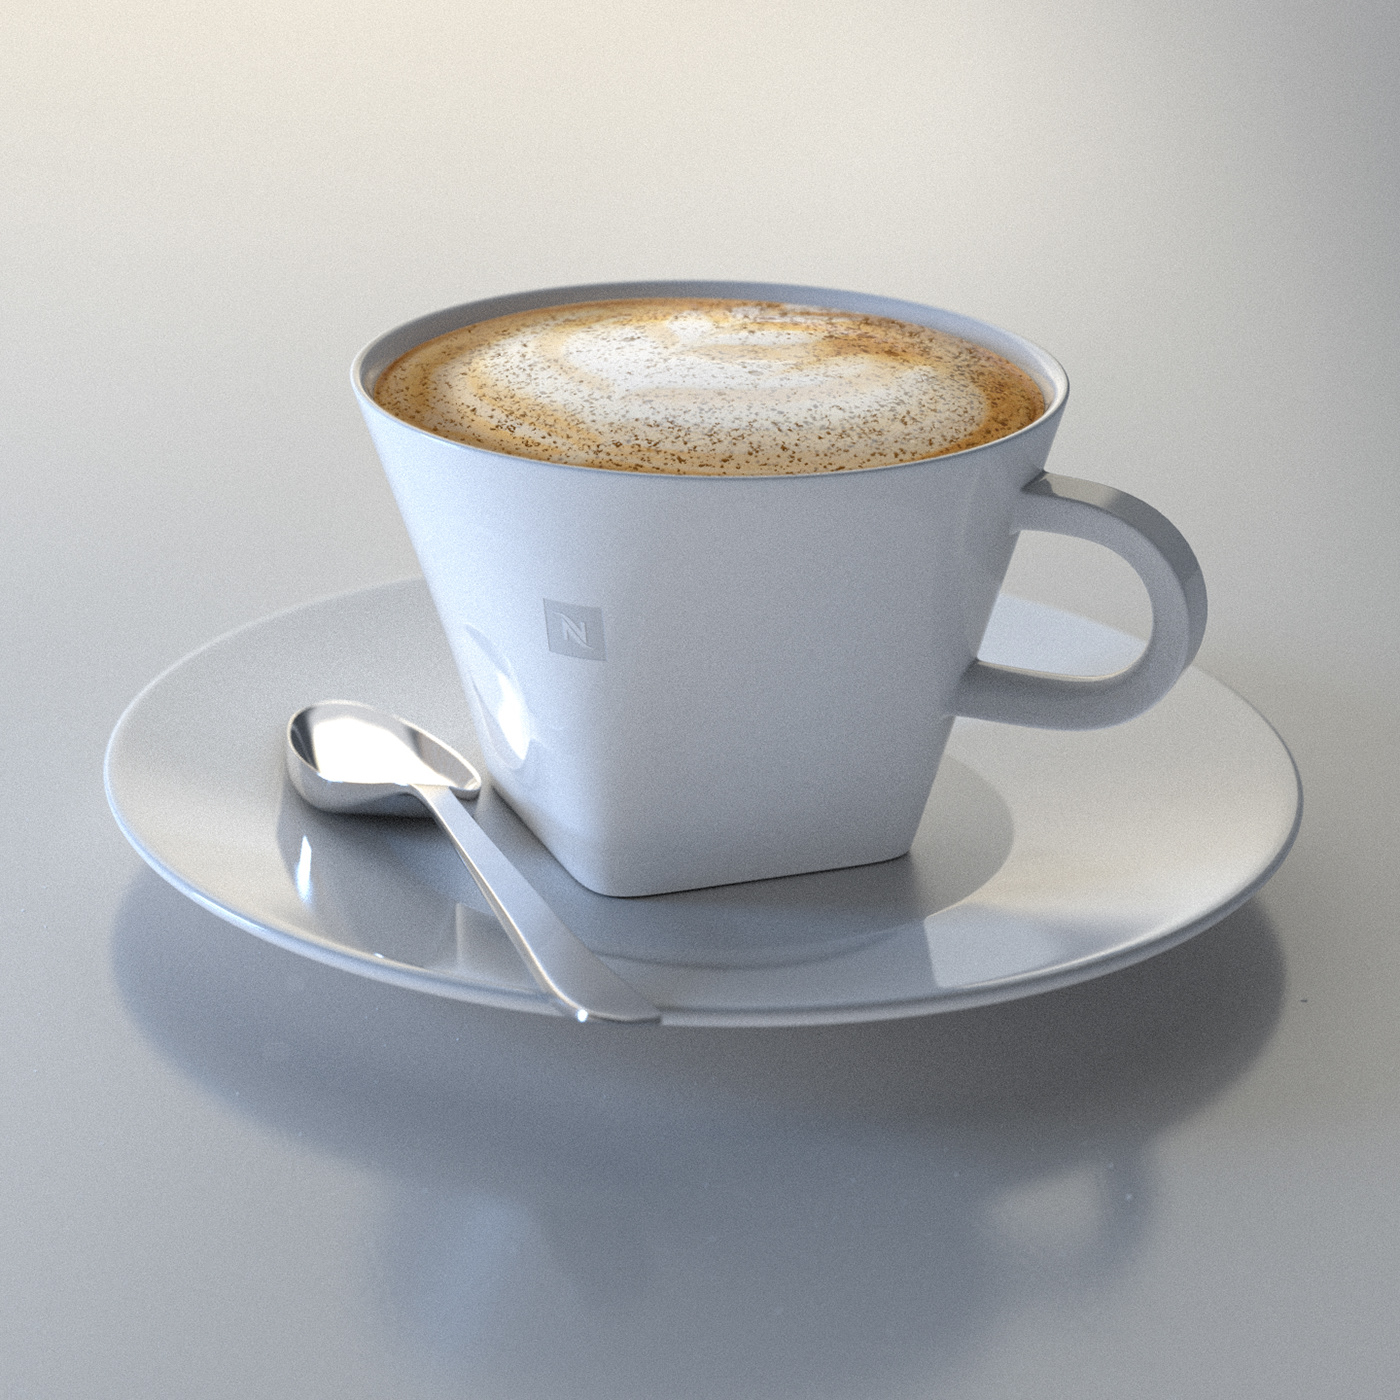 3d modeling 3d render 3dsmax cappuccino CGI Coffee cup keyshot keyshot3d kitchen utilities Nespresso photoshop post-production Pottery product design  Render rendering 3d artist 3d vizualization design designer